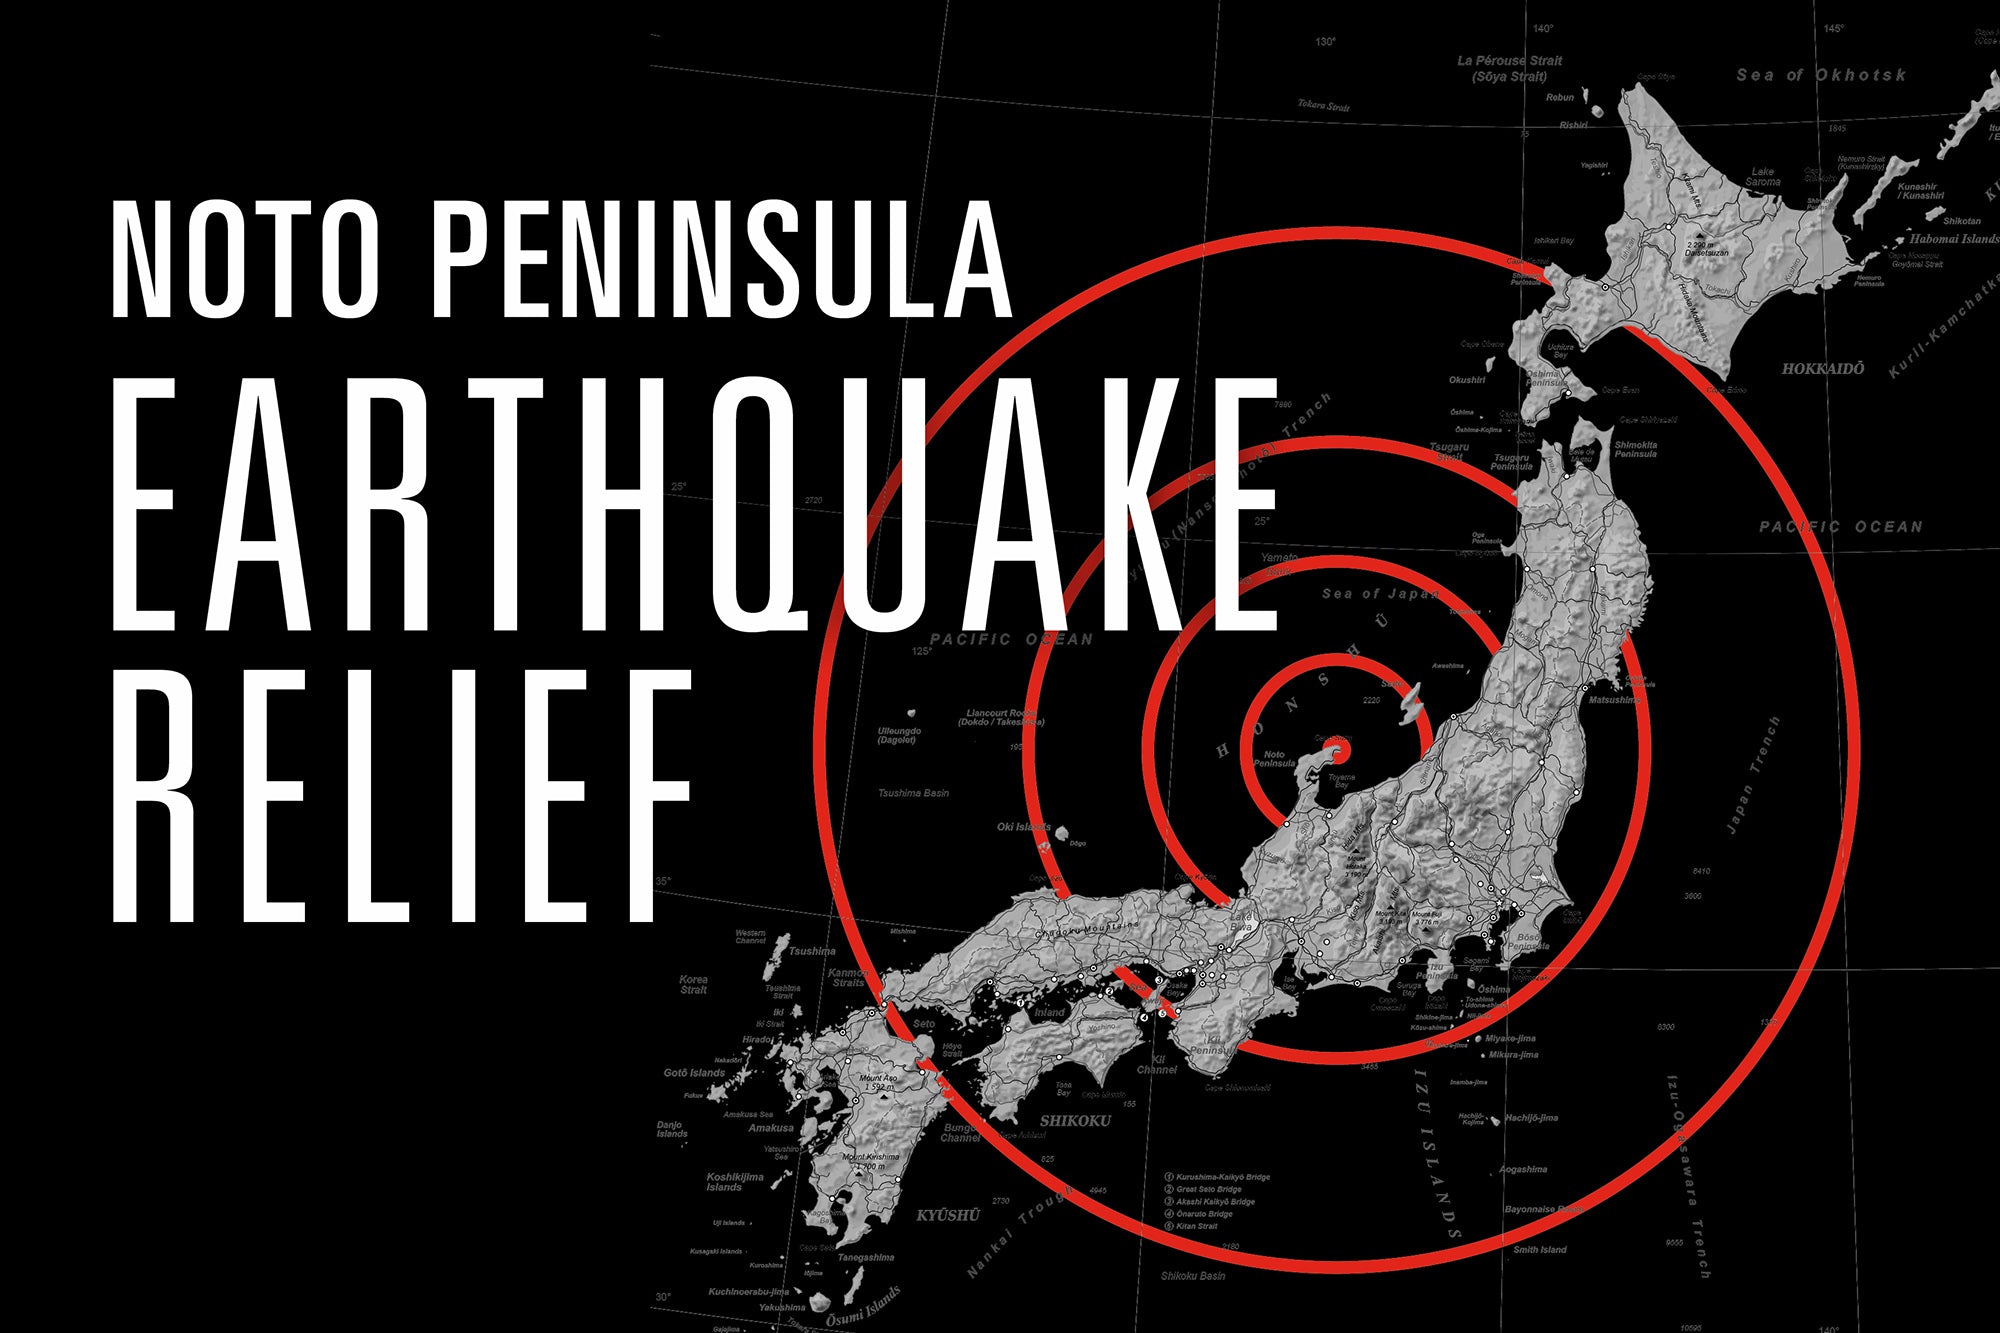 Sharpening for Noto Peninsula Earthquake Relief, Jan 29 - Feb 4